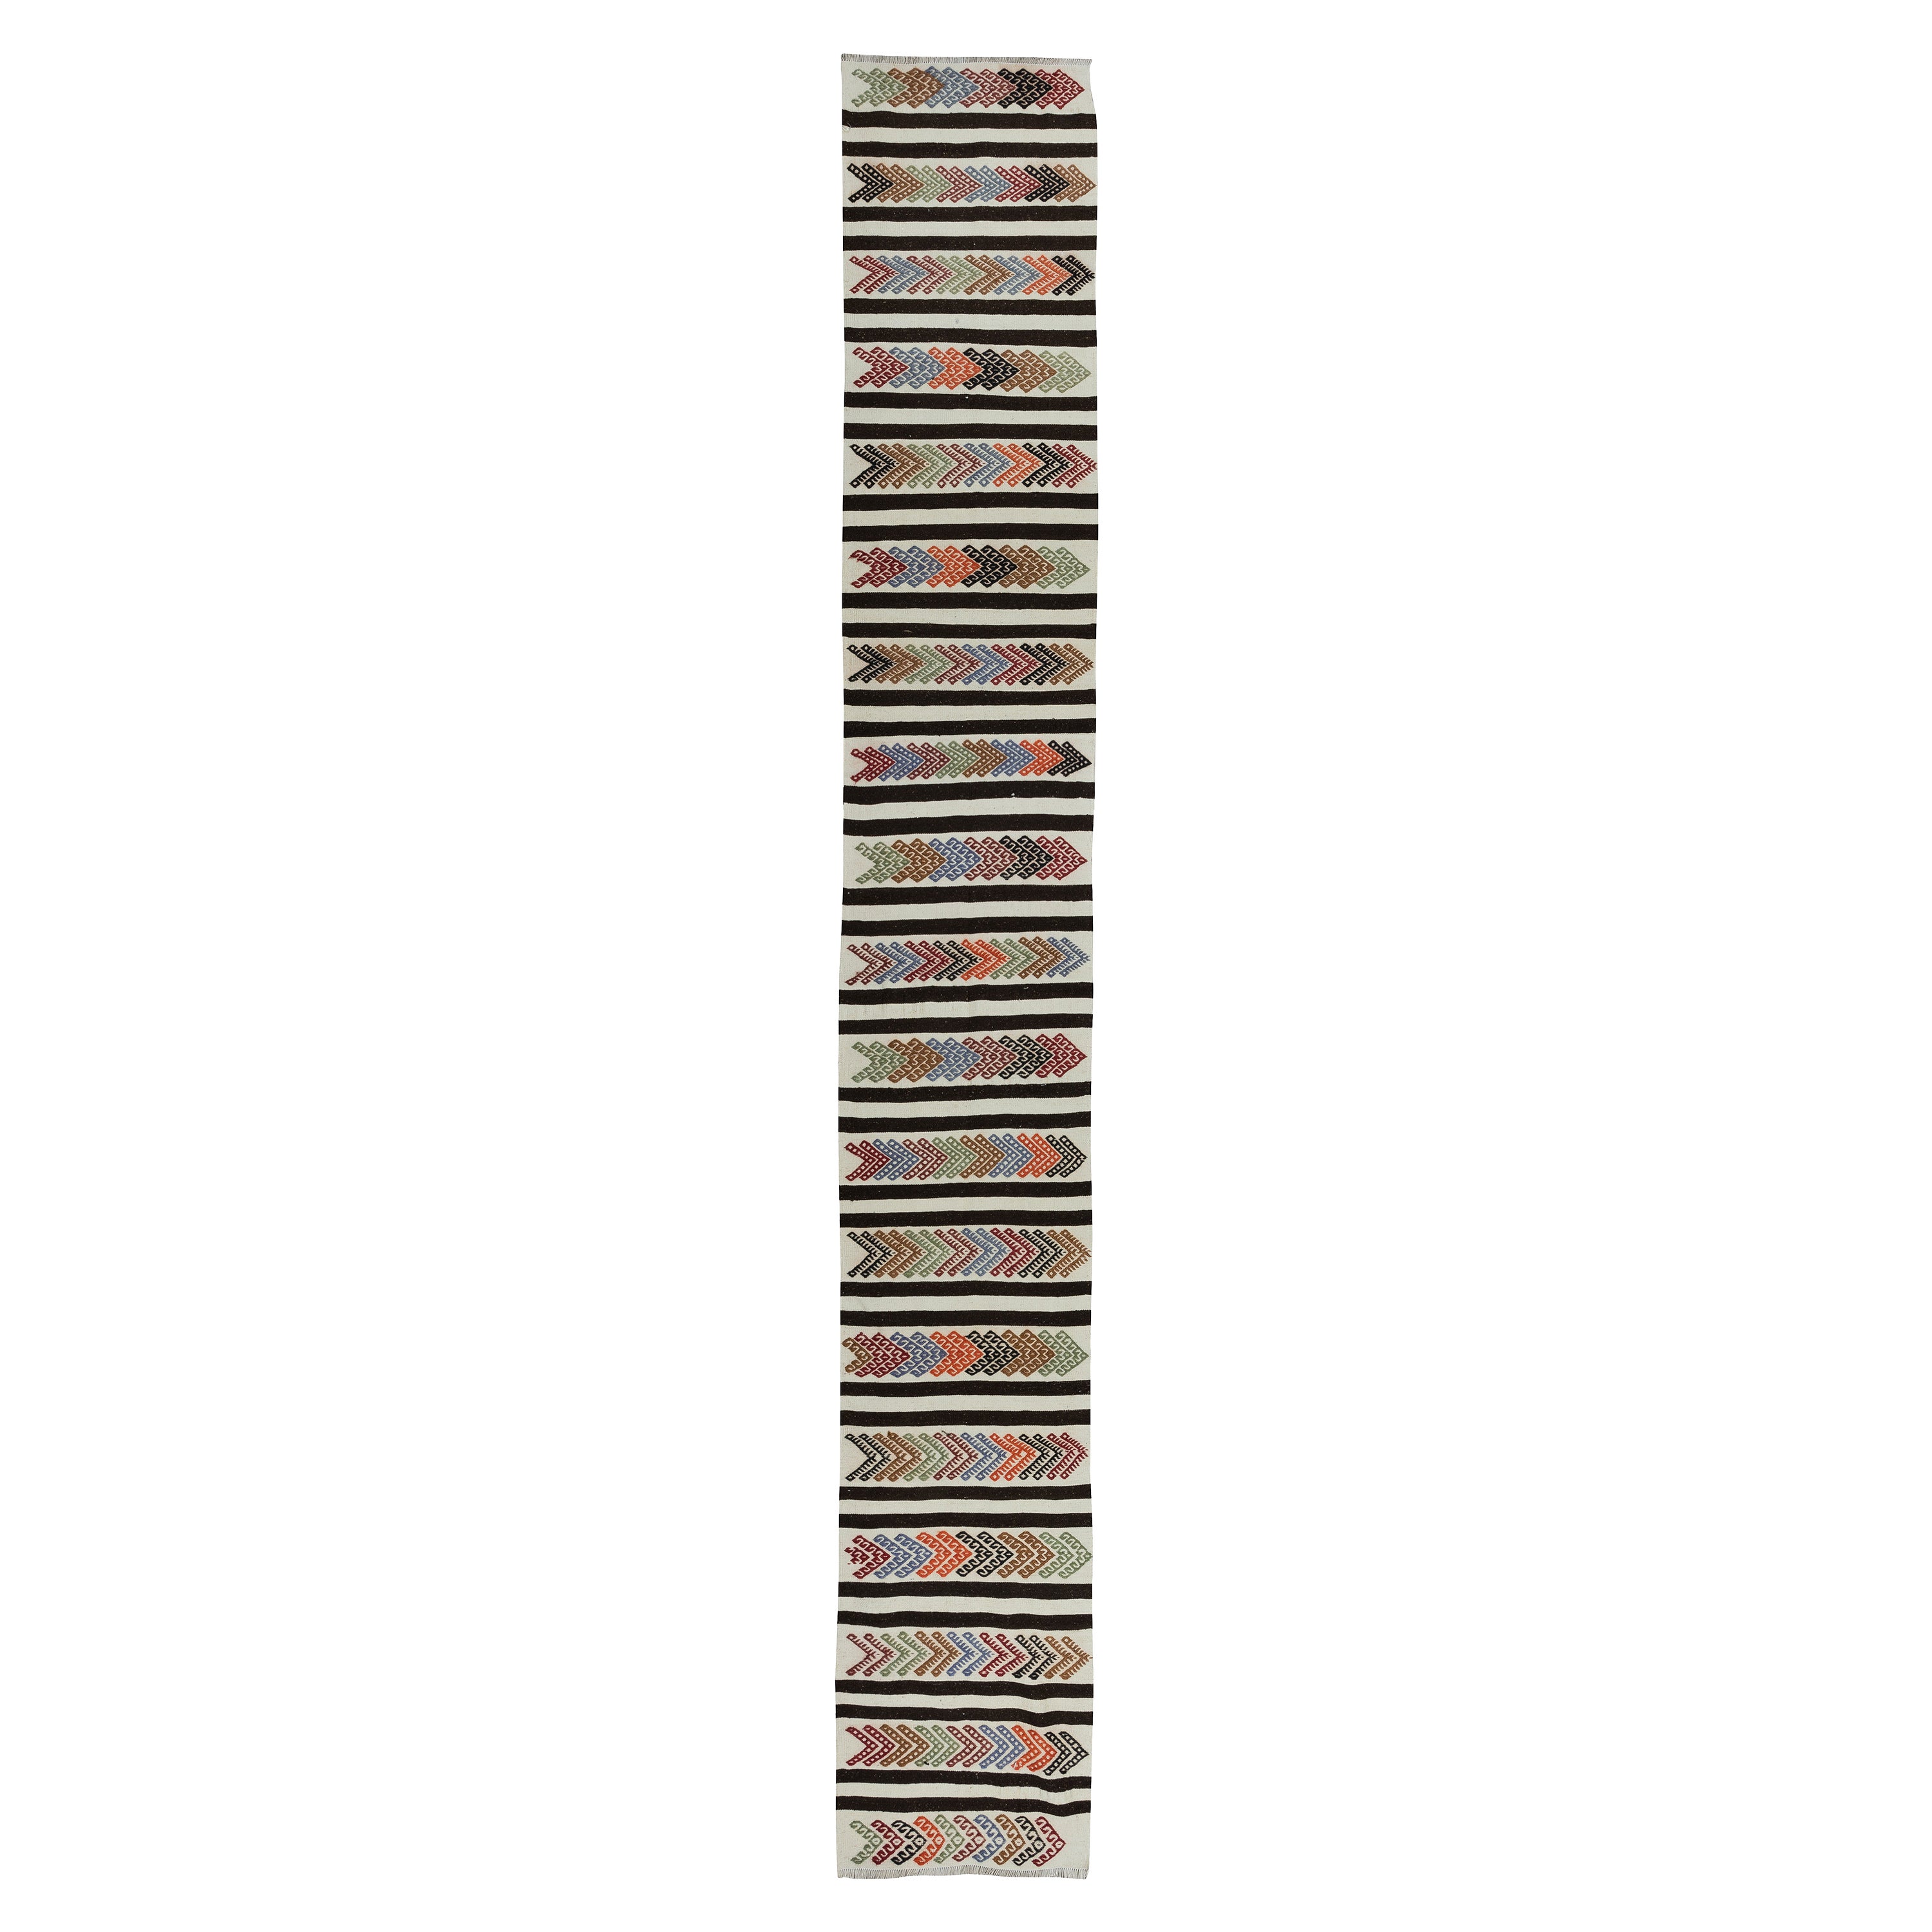 2.2x15 Ft FlatWeave Narrow & Long Runner Kilim, Handmade Striped Rug for Hallway